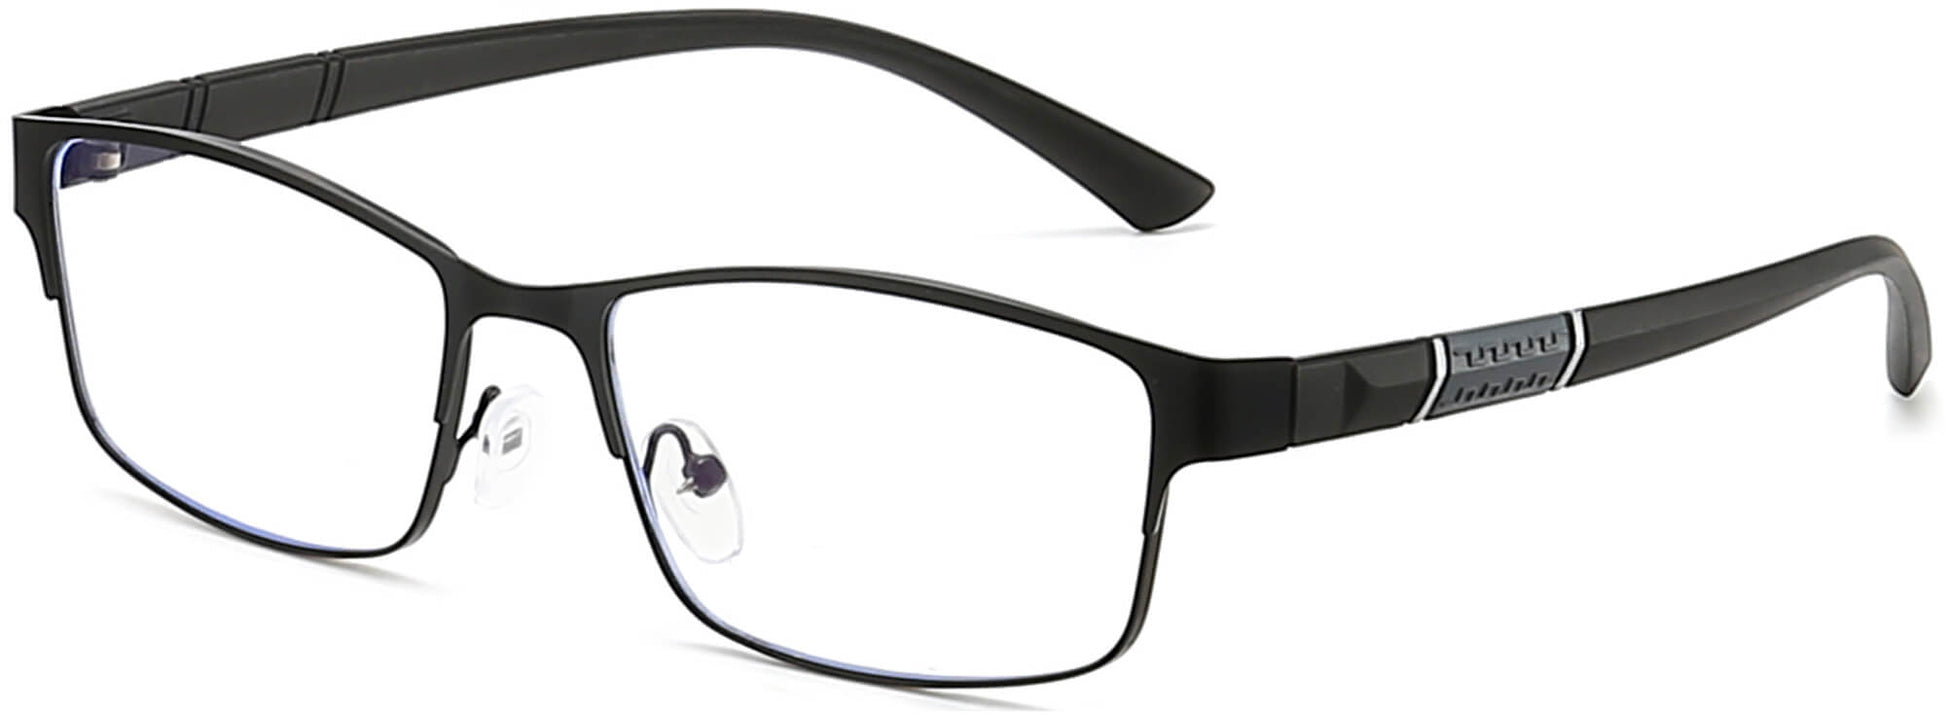 Wishlist Rectangle Black Eyeglasses from ANRRI, angle view